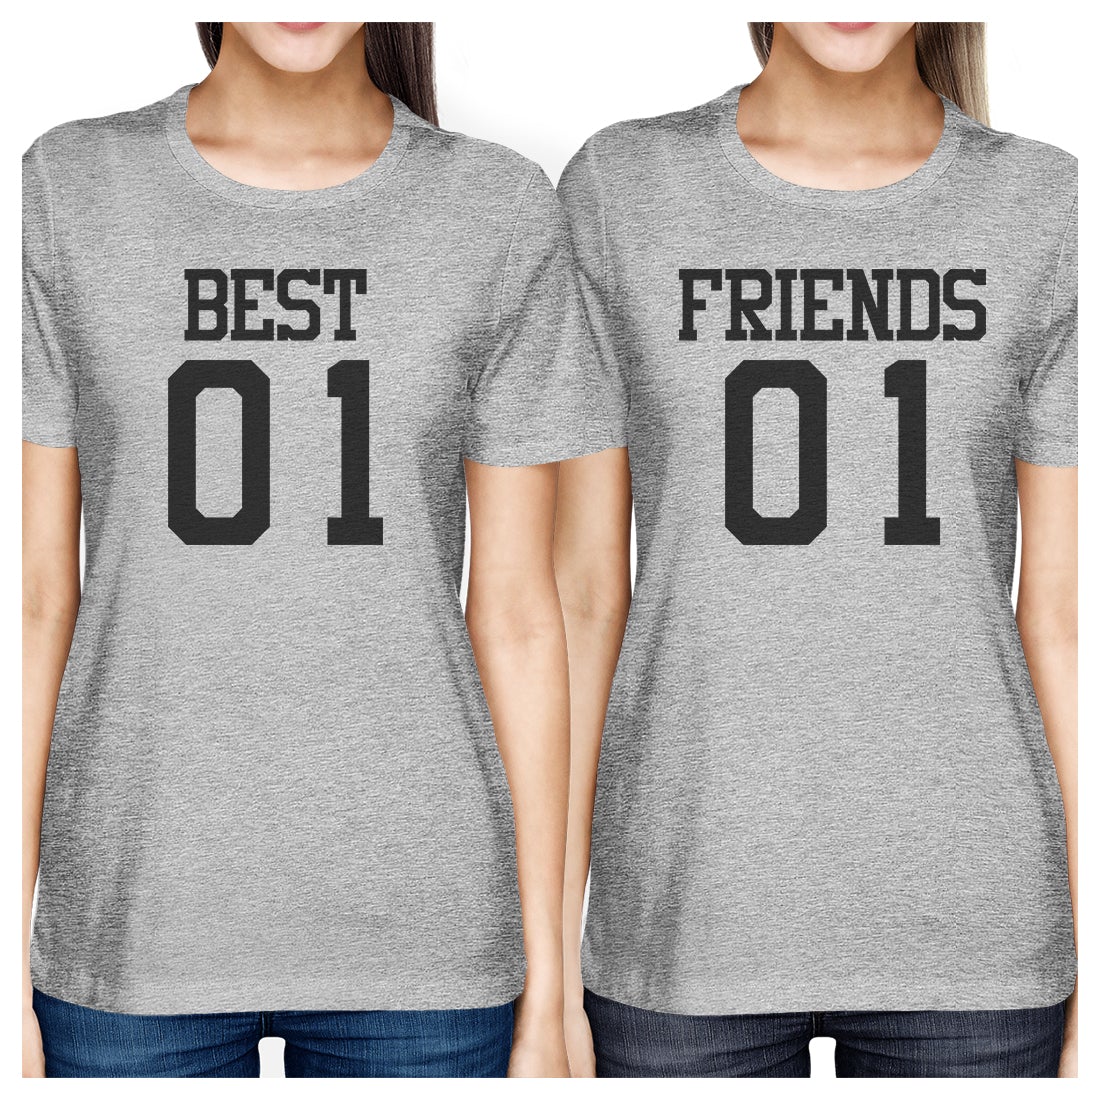 Best01 Friends01 BFF Matching Grey T-Shirts